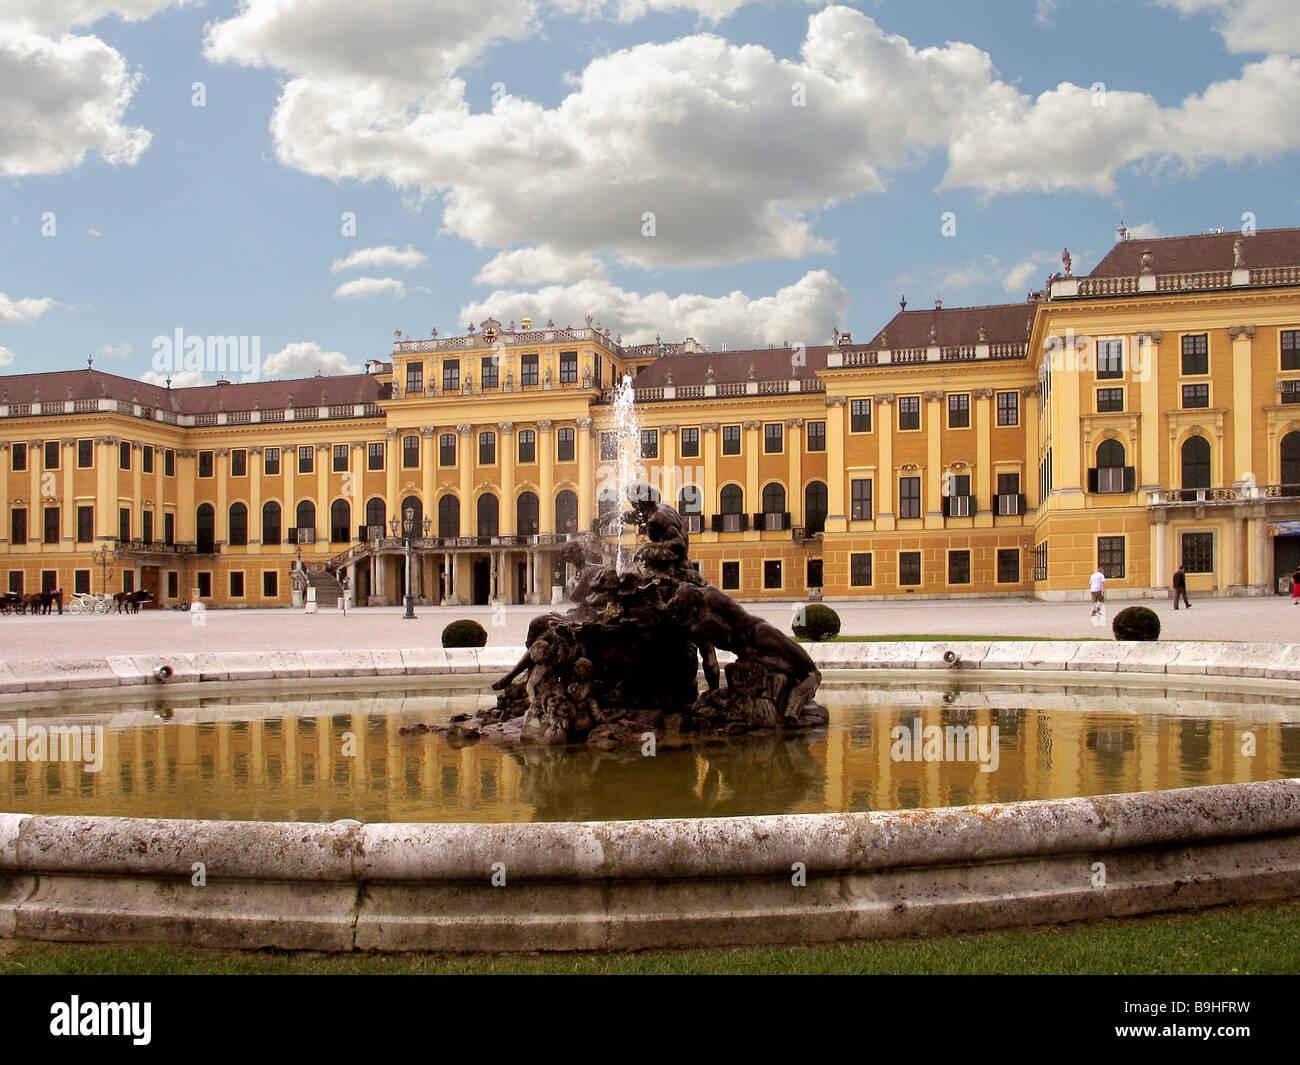 Forecourt of Schonbrunn Palace, Vienna, Austria Stock Photo